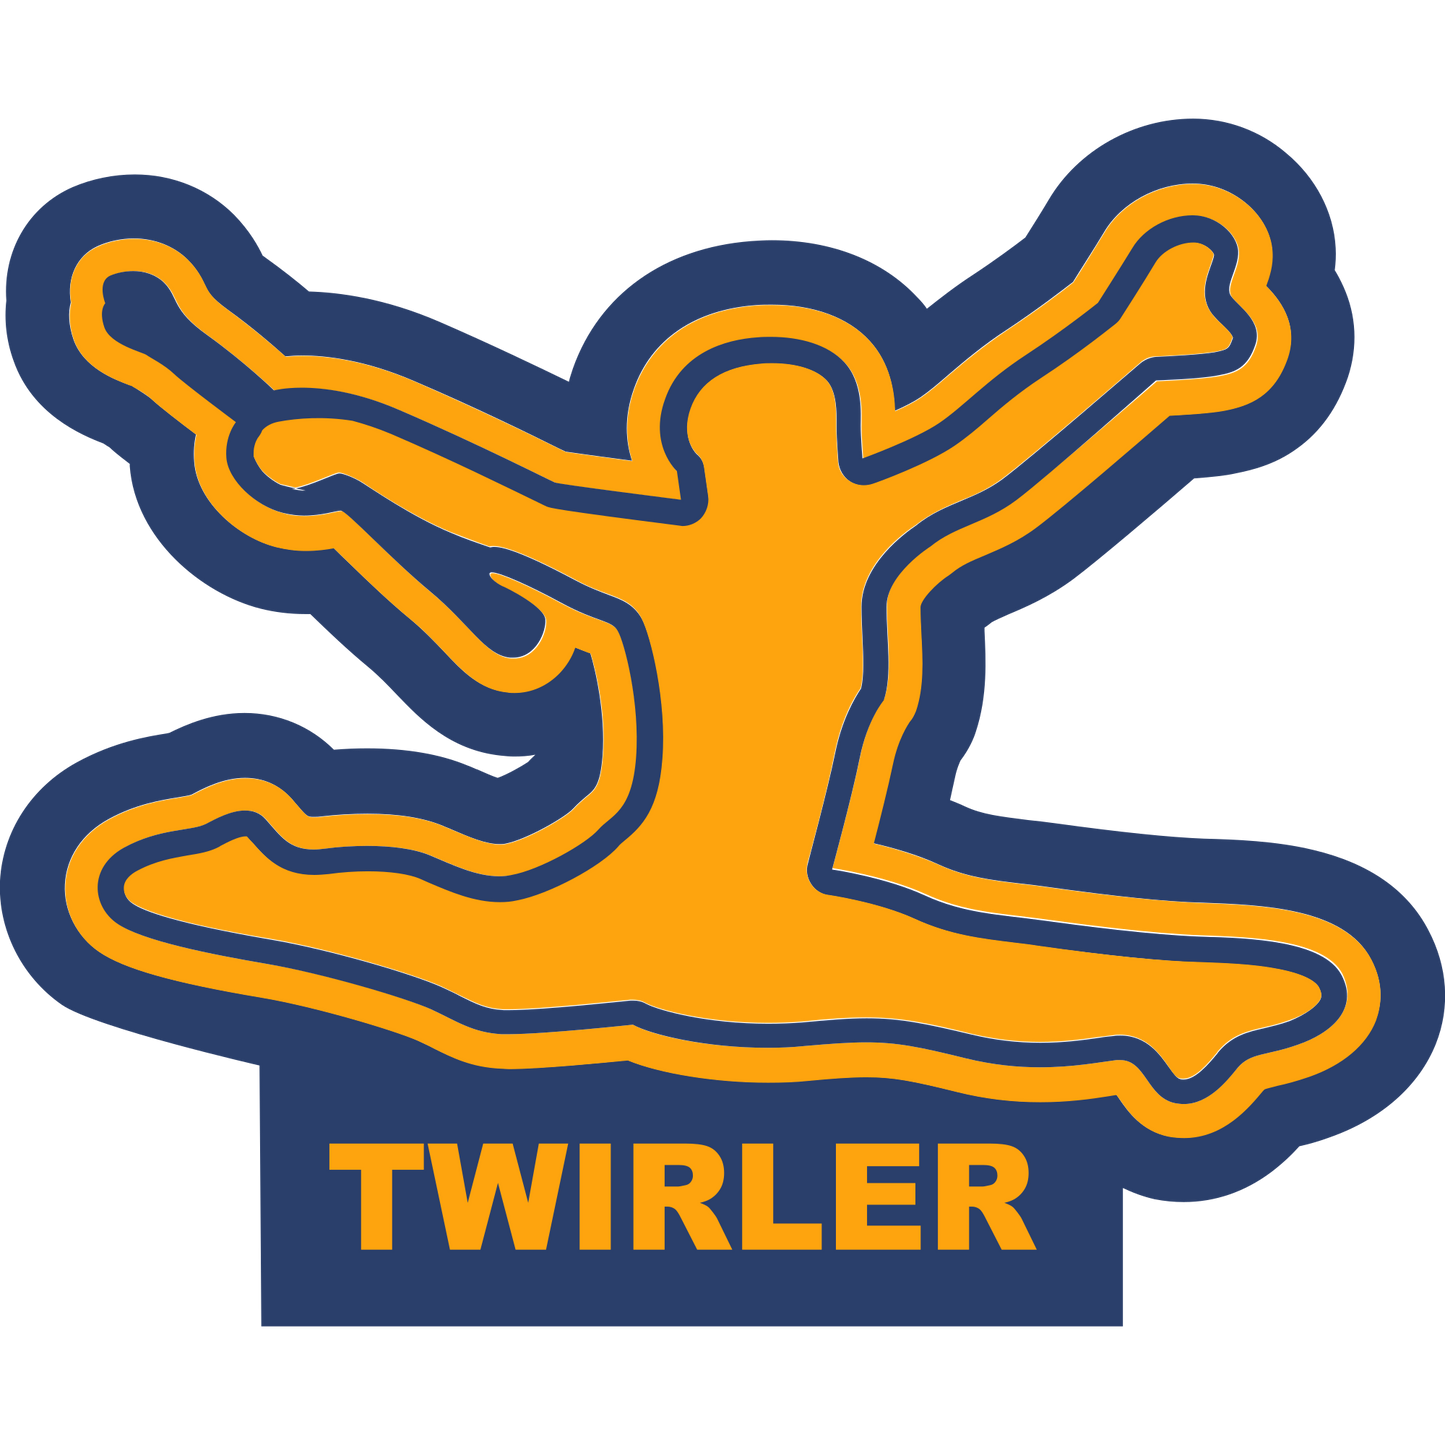 TWIRL - Twirler Girl Sleeve Patch